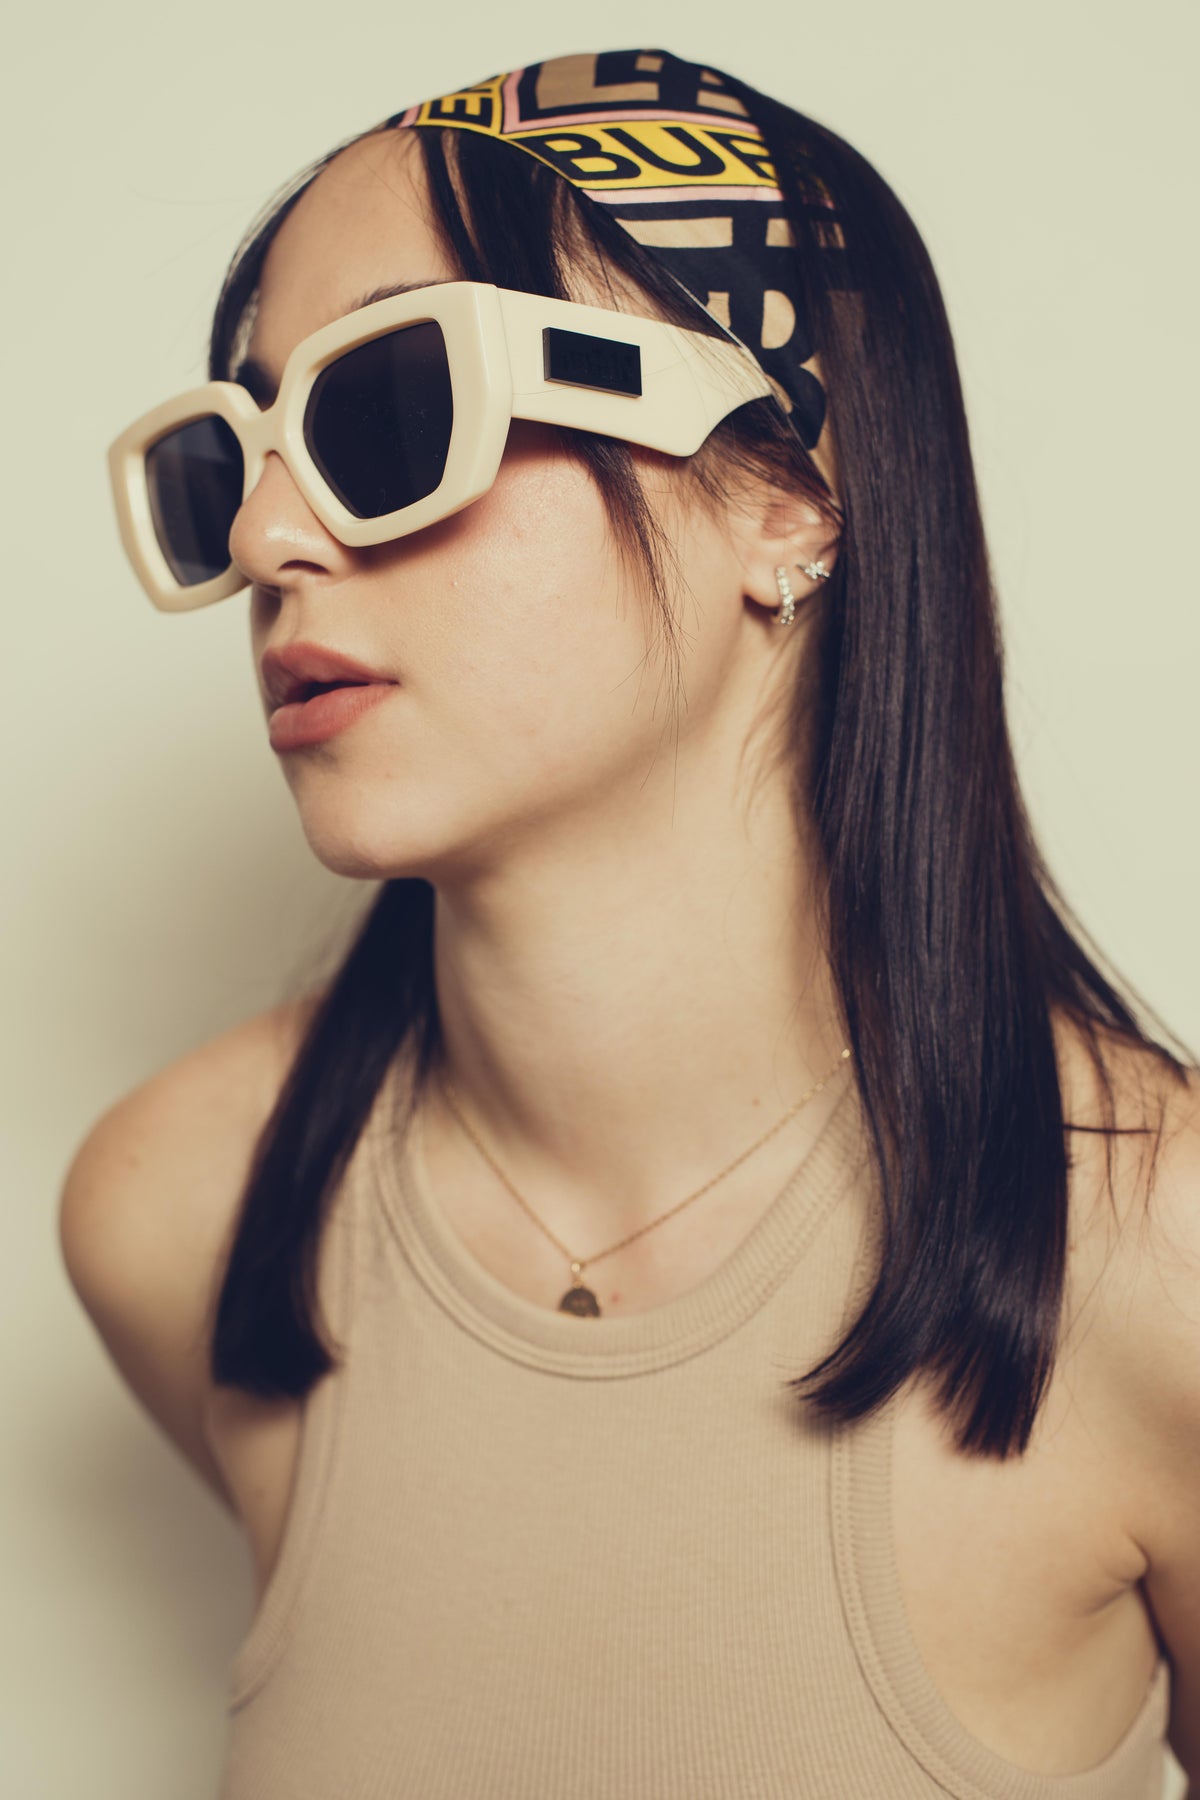 portrait of a woman wearing bold white sunglasses